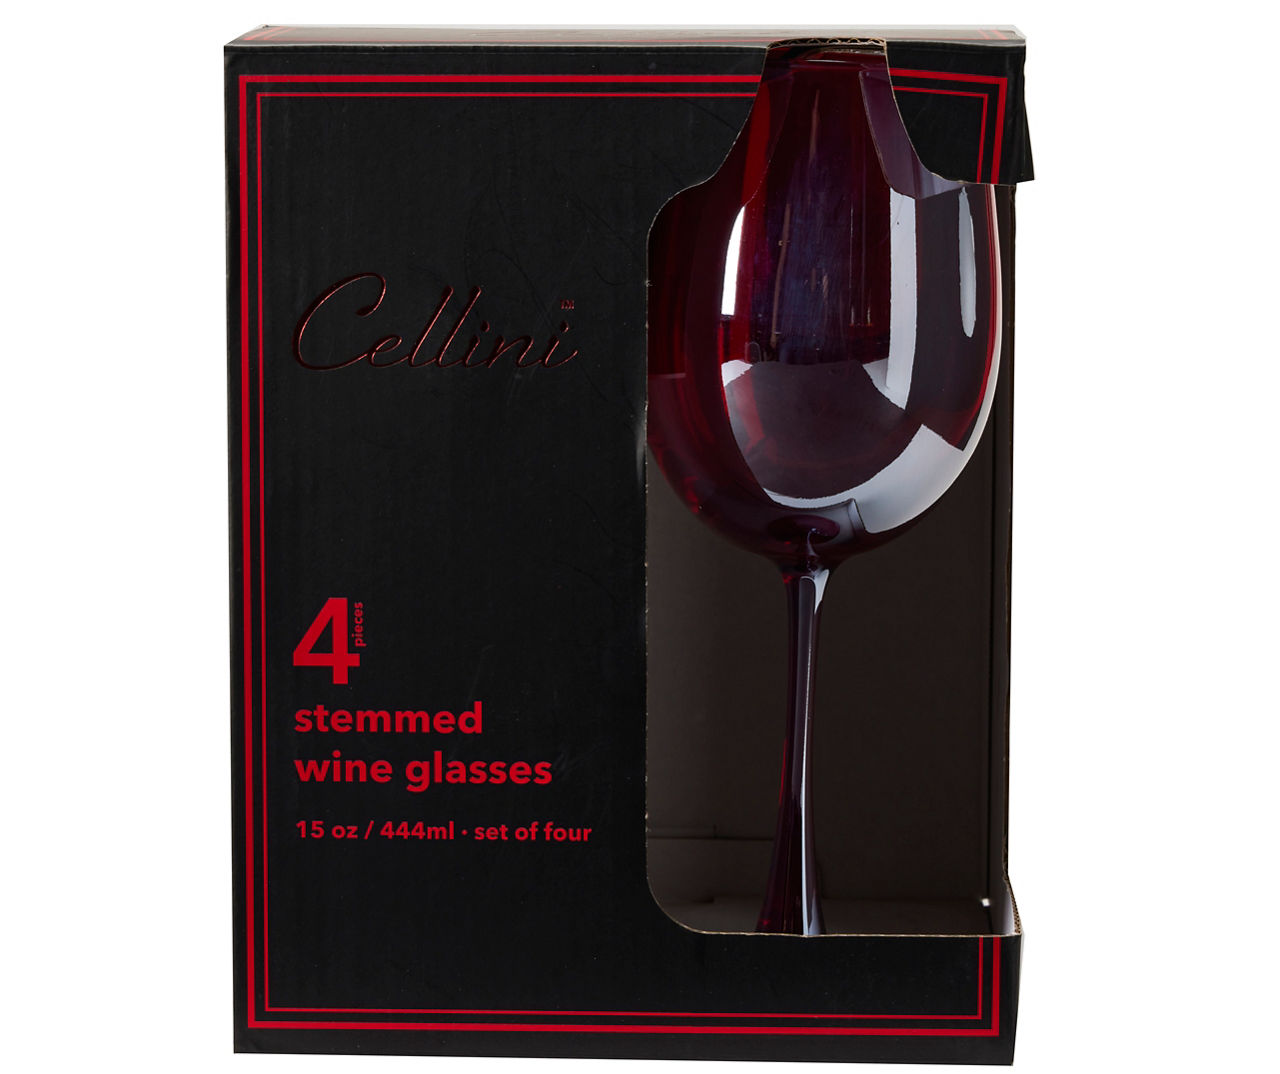 Home Essentials Oversize Stemmed Wineglass, 28.7 Oz.